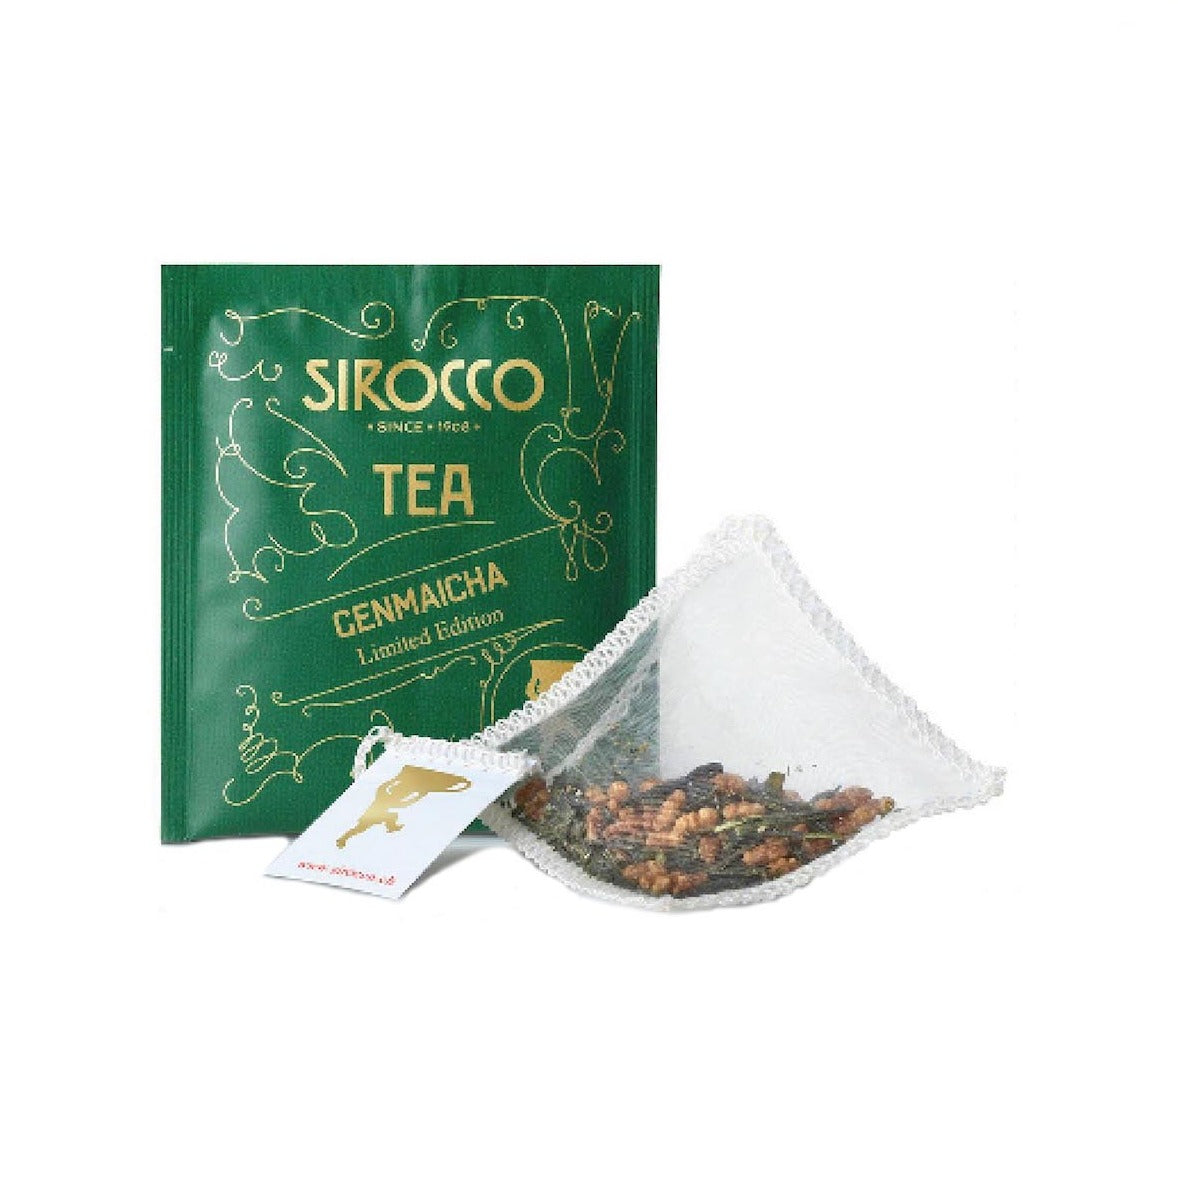 SIROCCO Genmaicha Limited Edition 100% organic tea handcrafted 